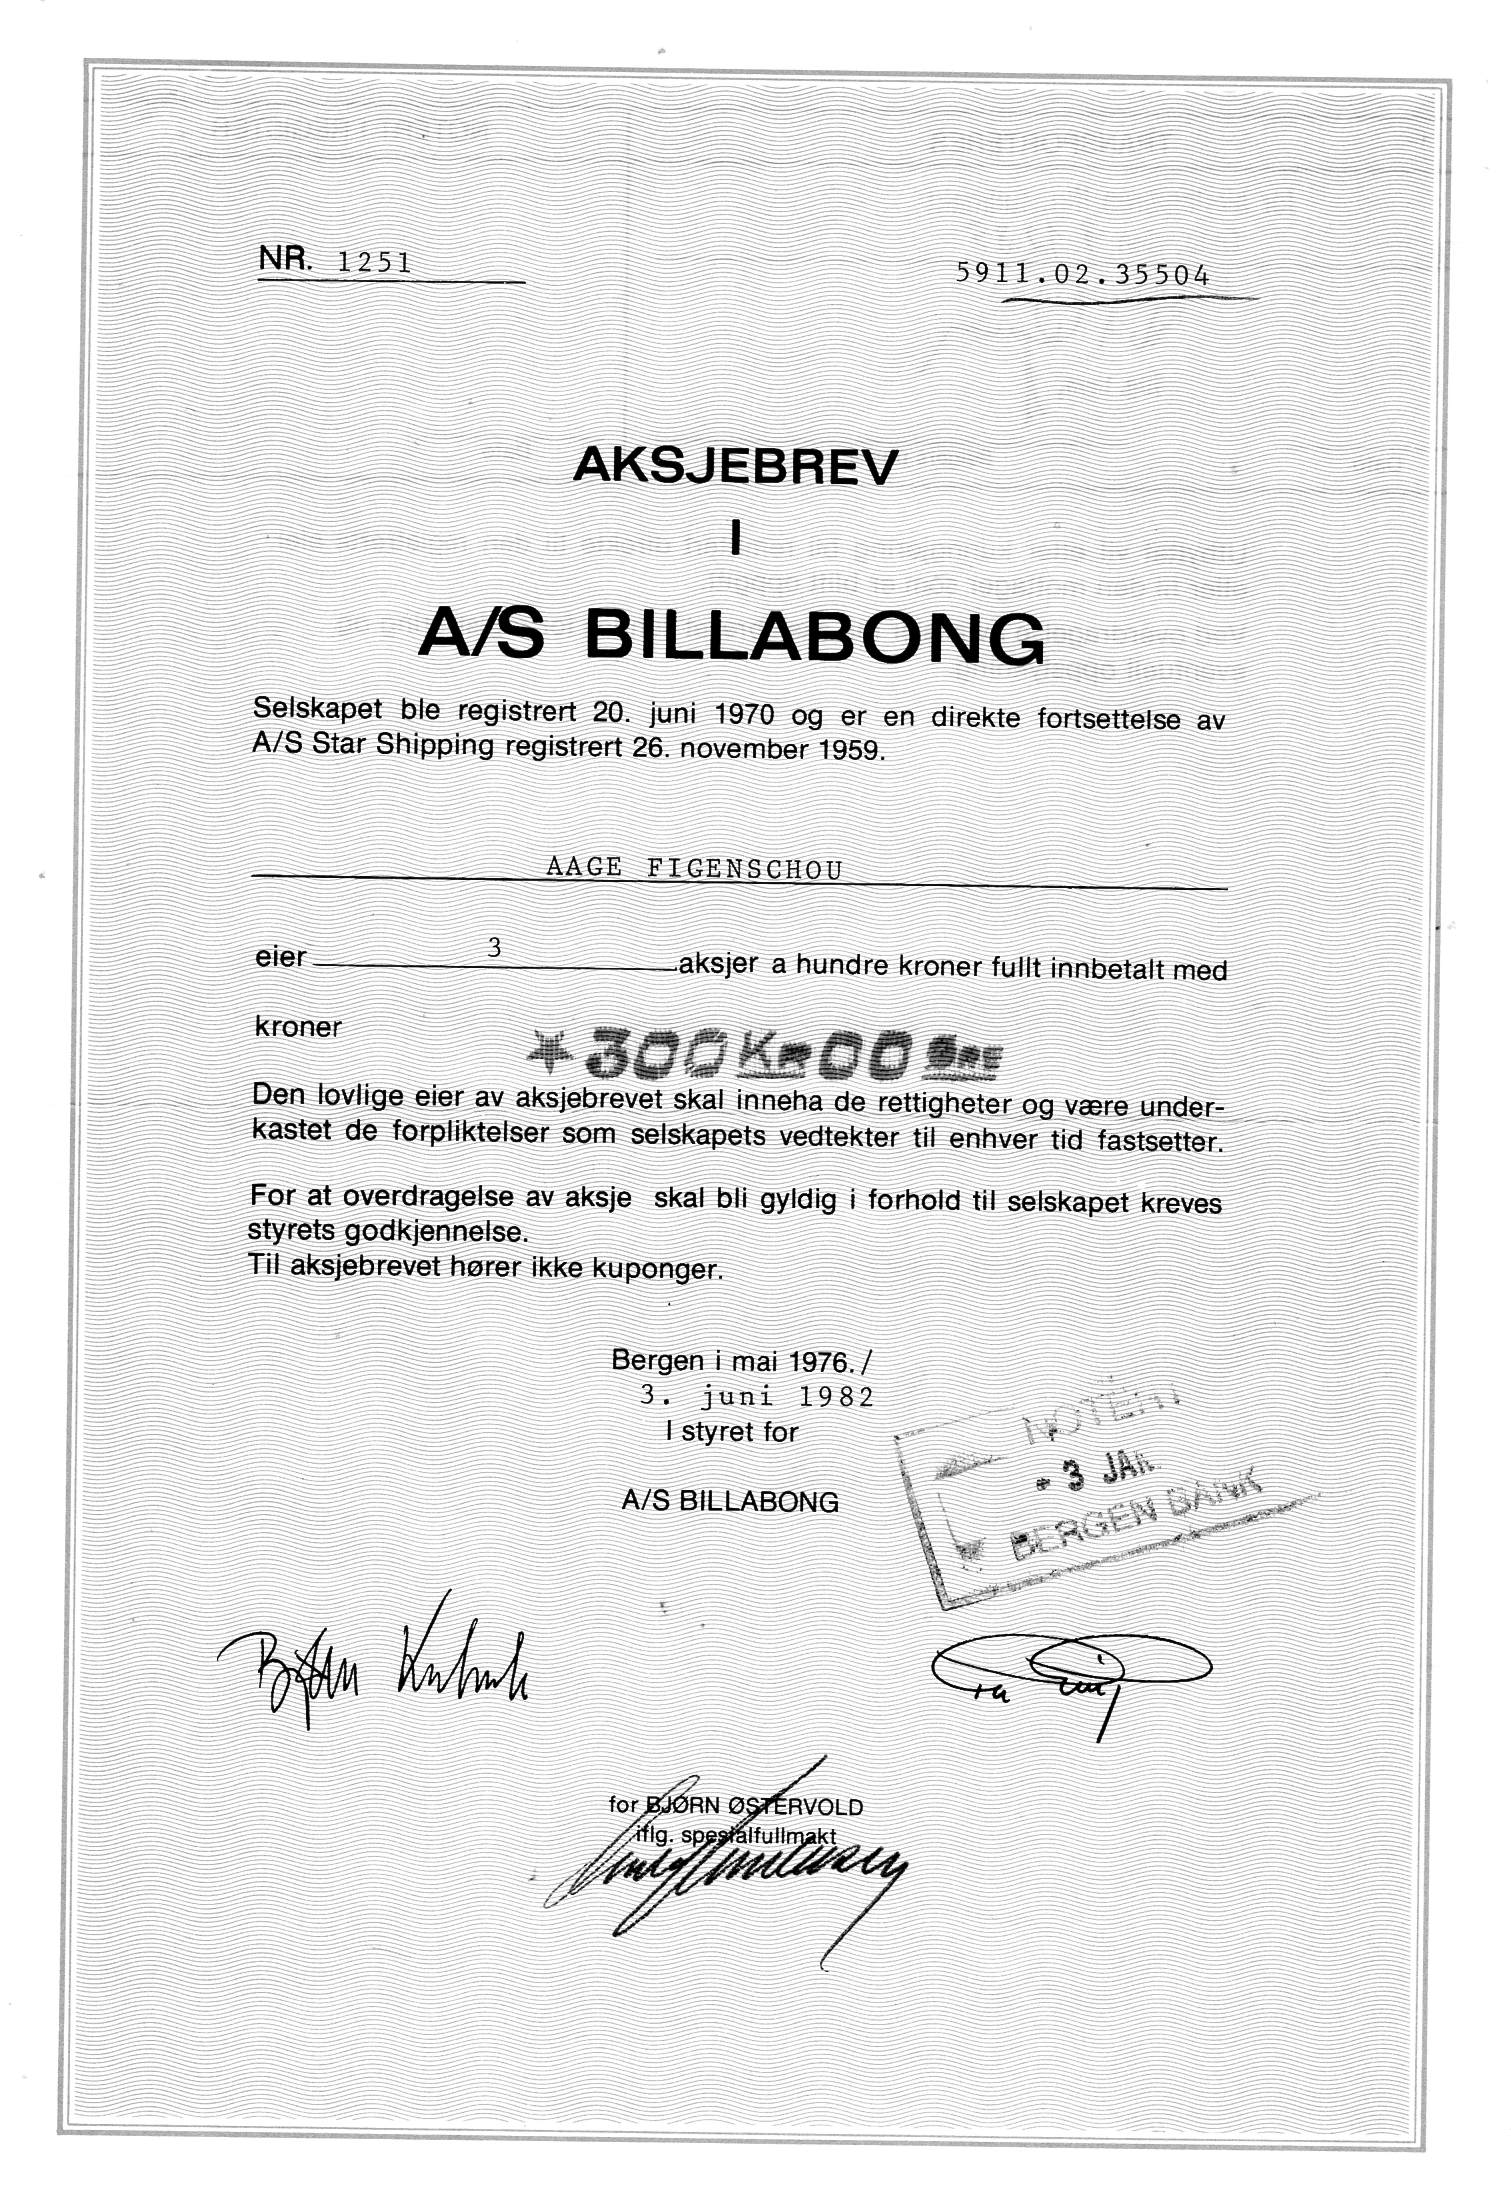 Billabong Bergen 1976 kr 100 nr 1439/1251/1263 pris pr stk